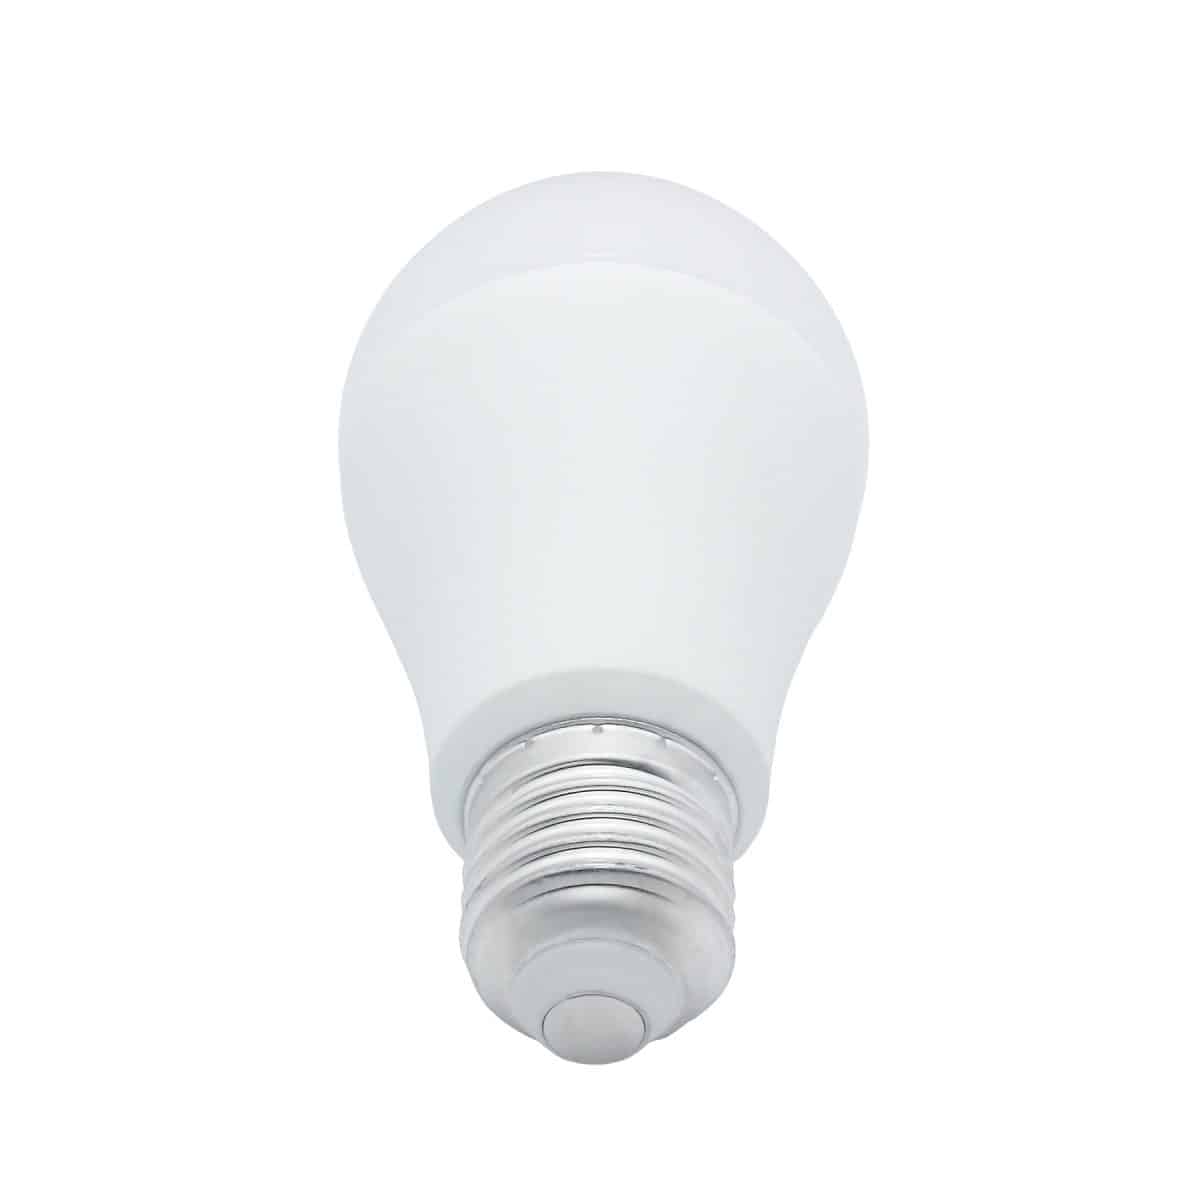 15watt GLS LED ES E27 Screw Cap Warm White Equivalent To 100watt